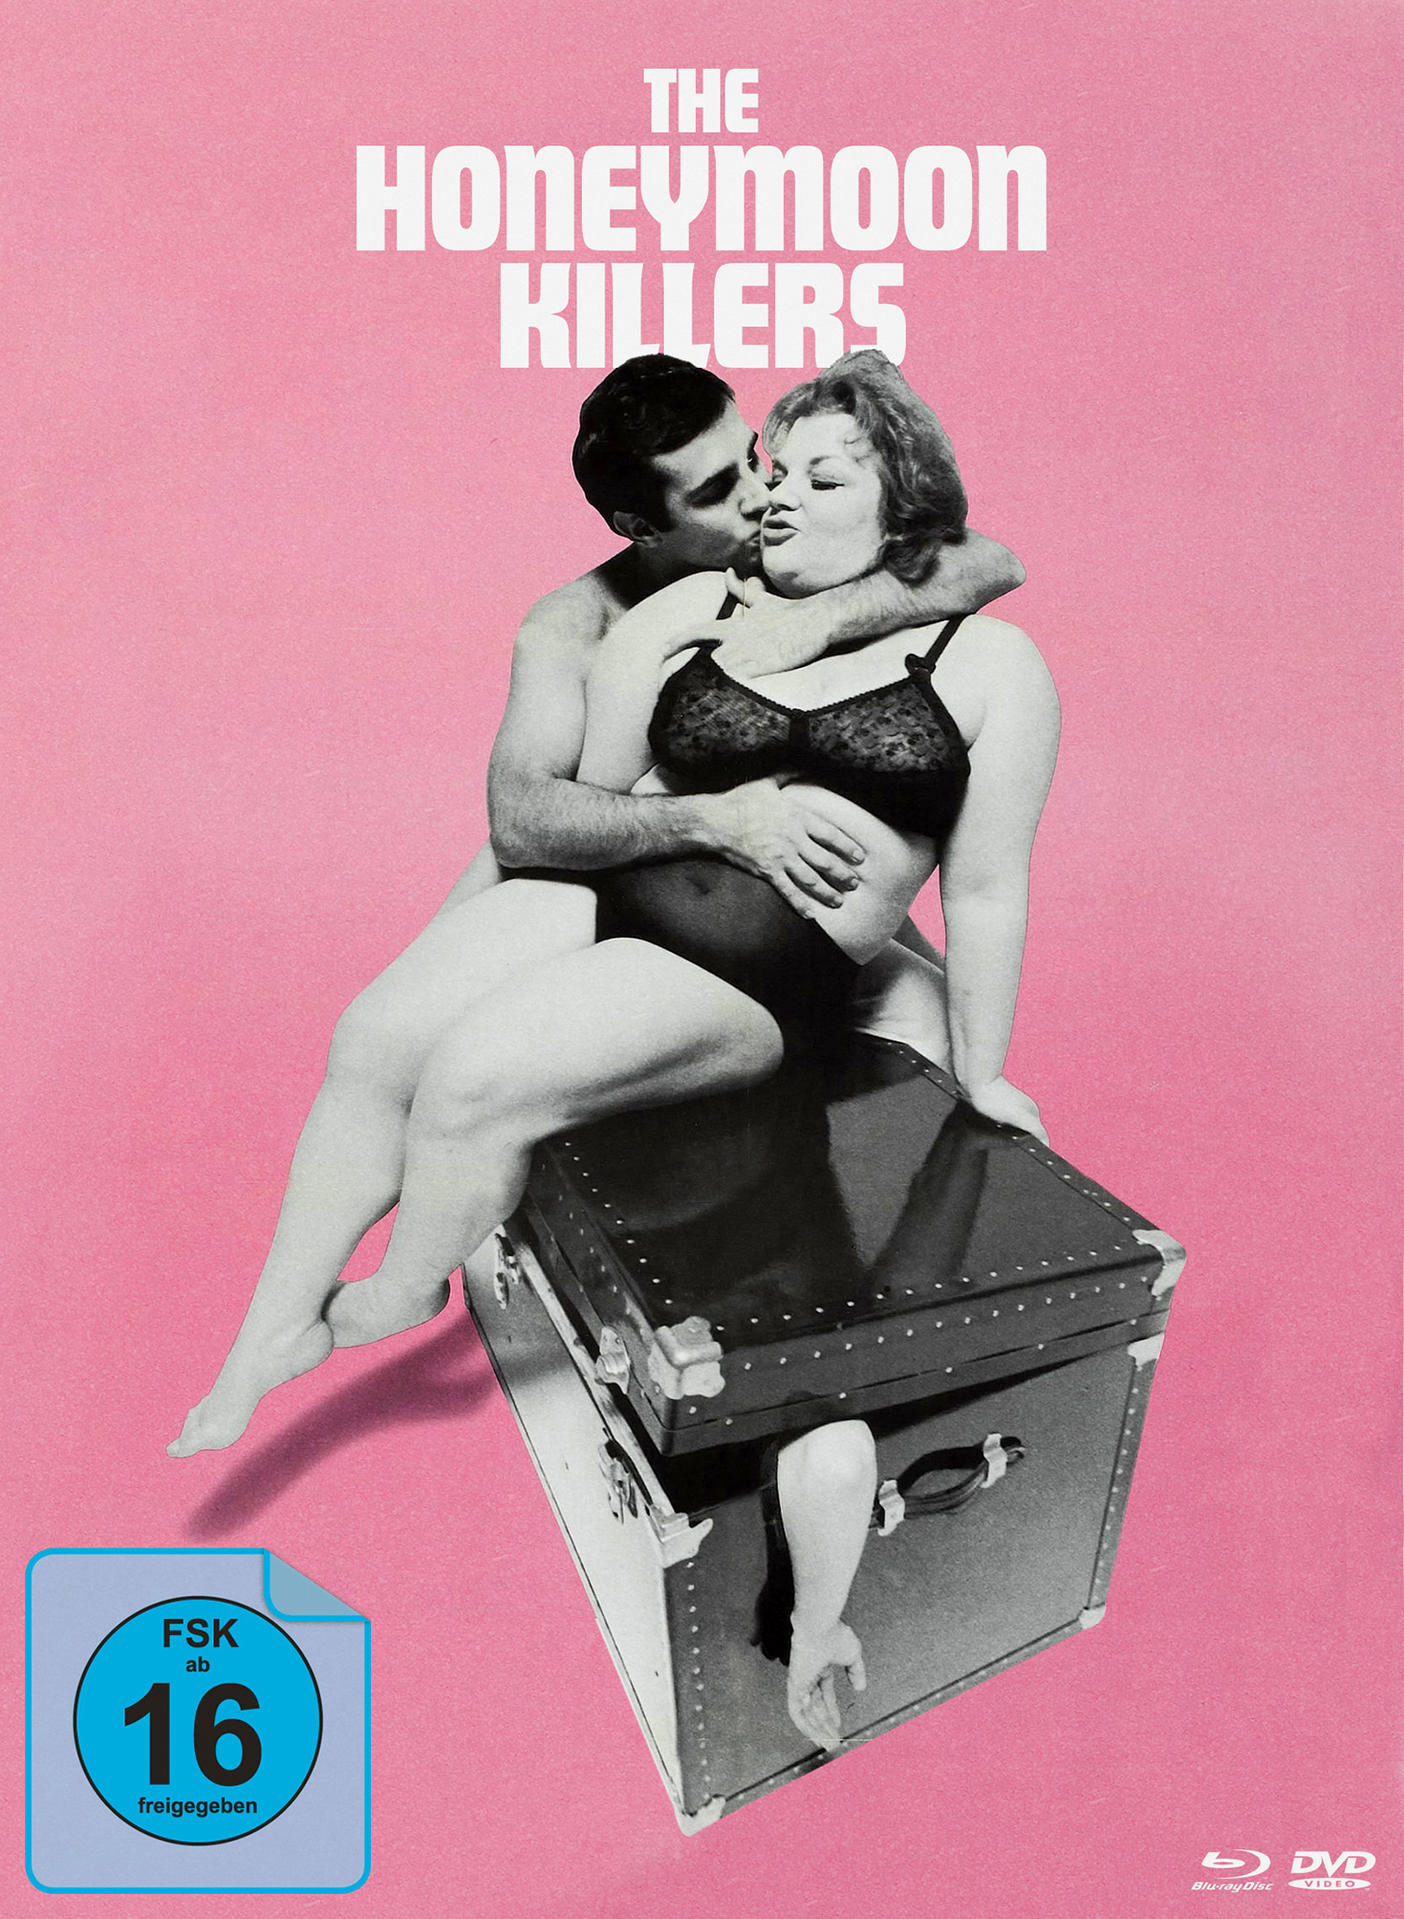 Blu-ray + The Killers Honeymoon DVD